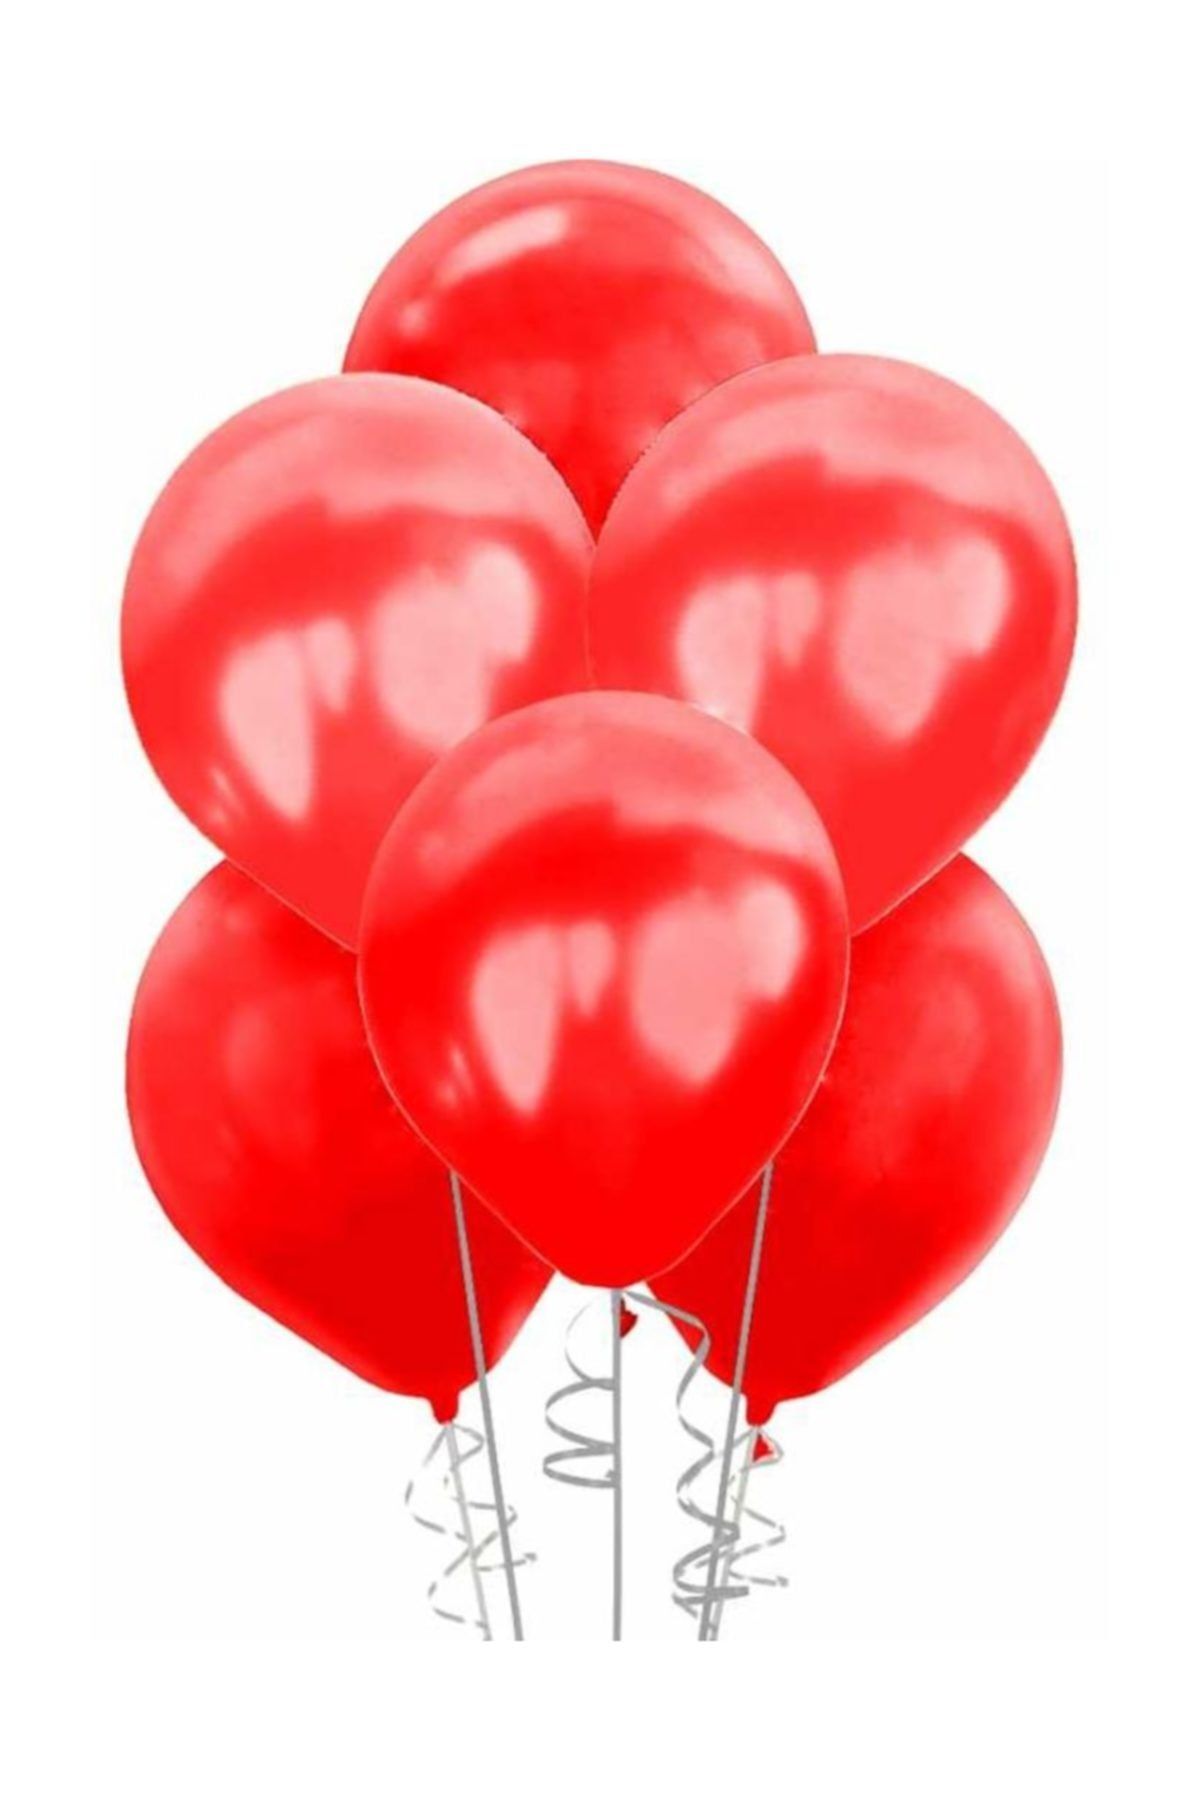 Cansüs Kırmızı Metalik Balon 12 Inç 10 Adet